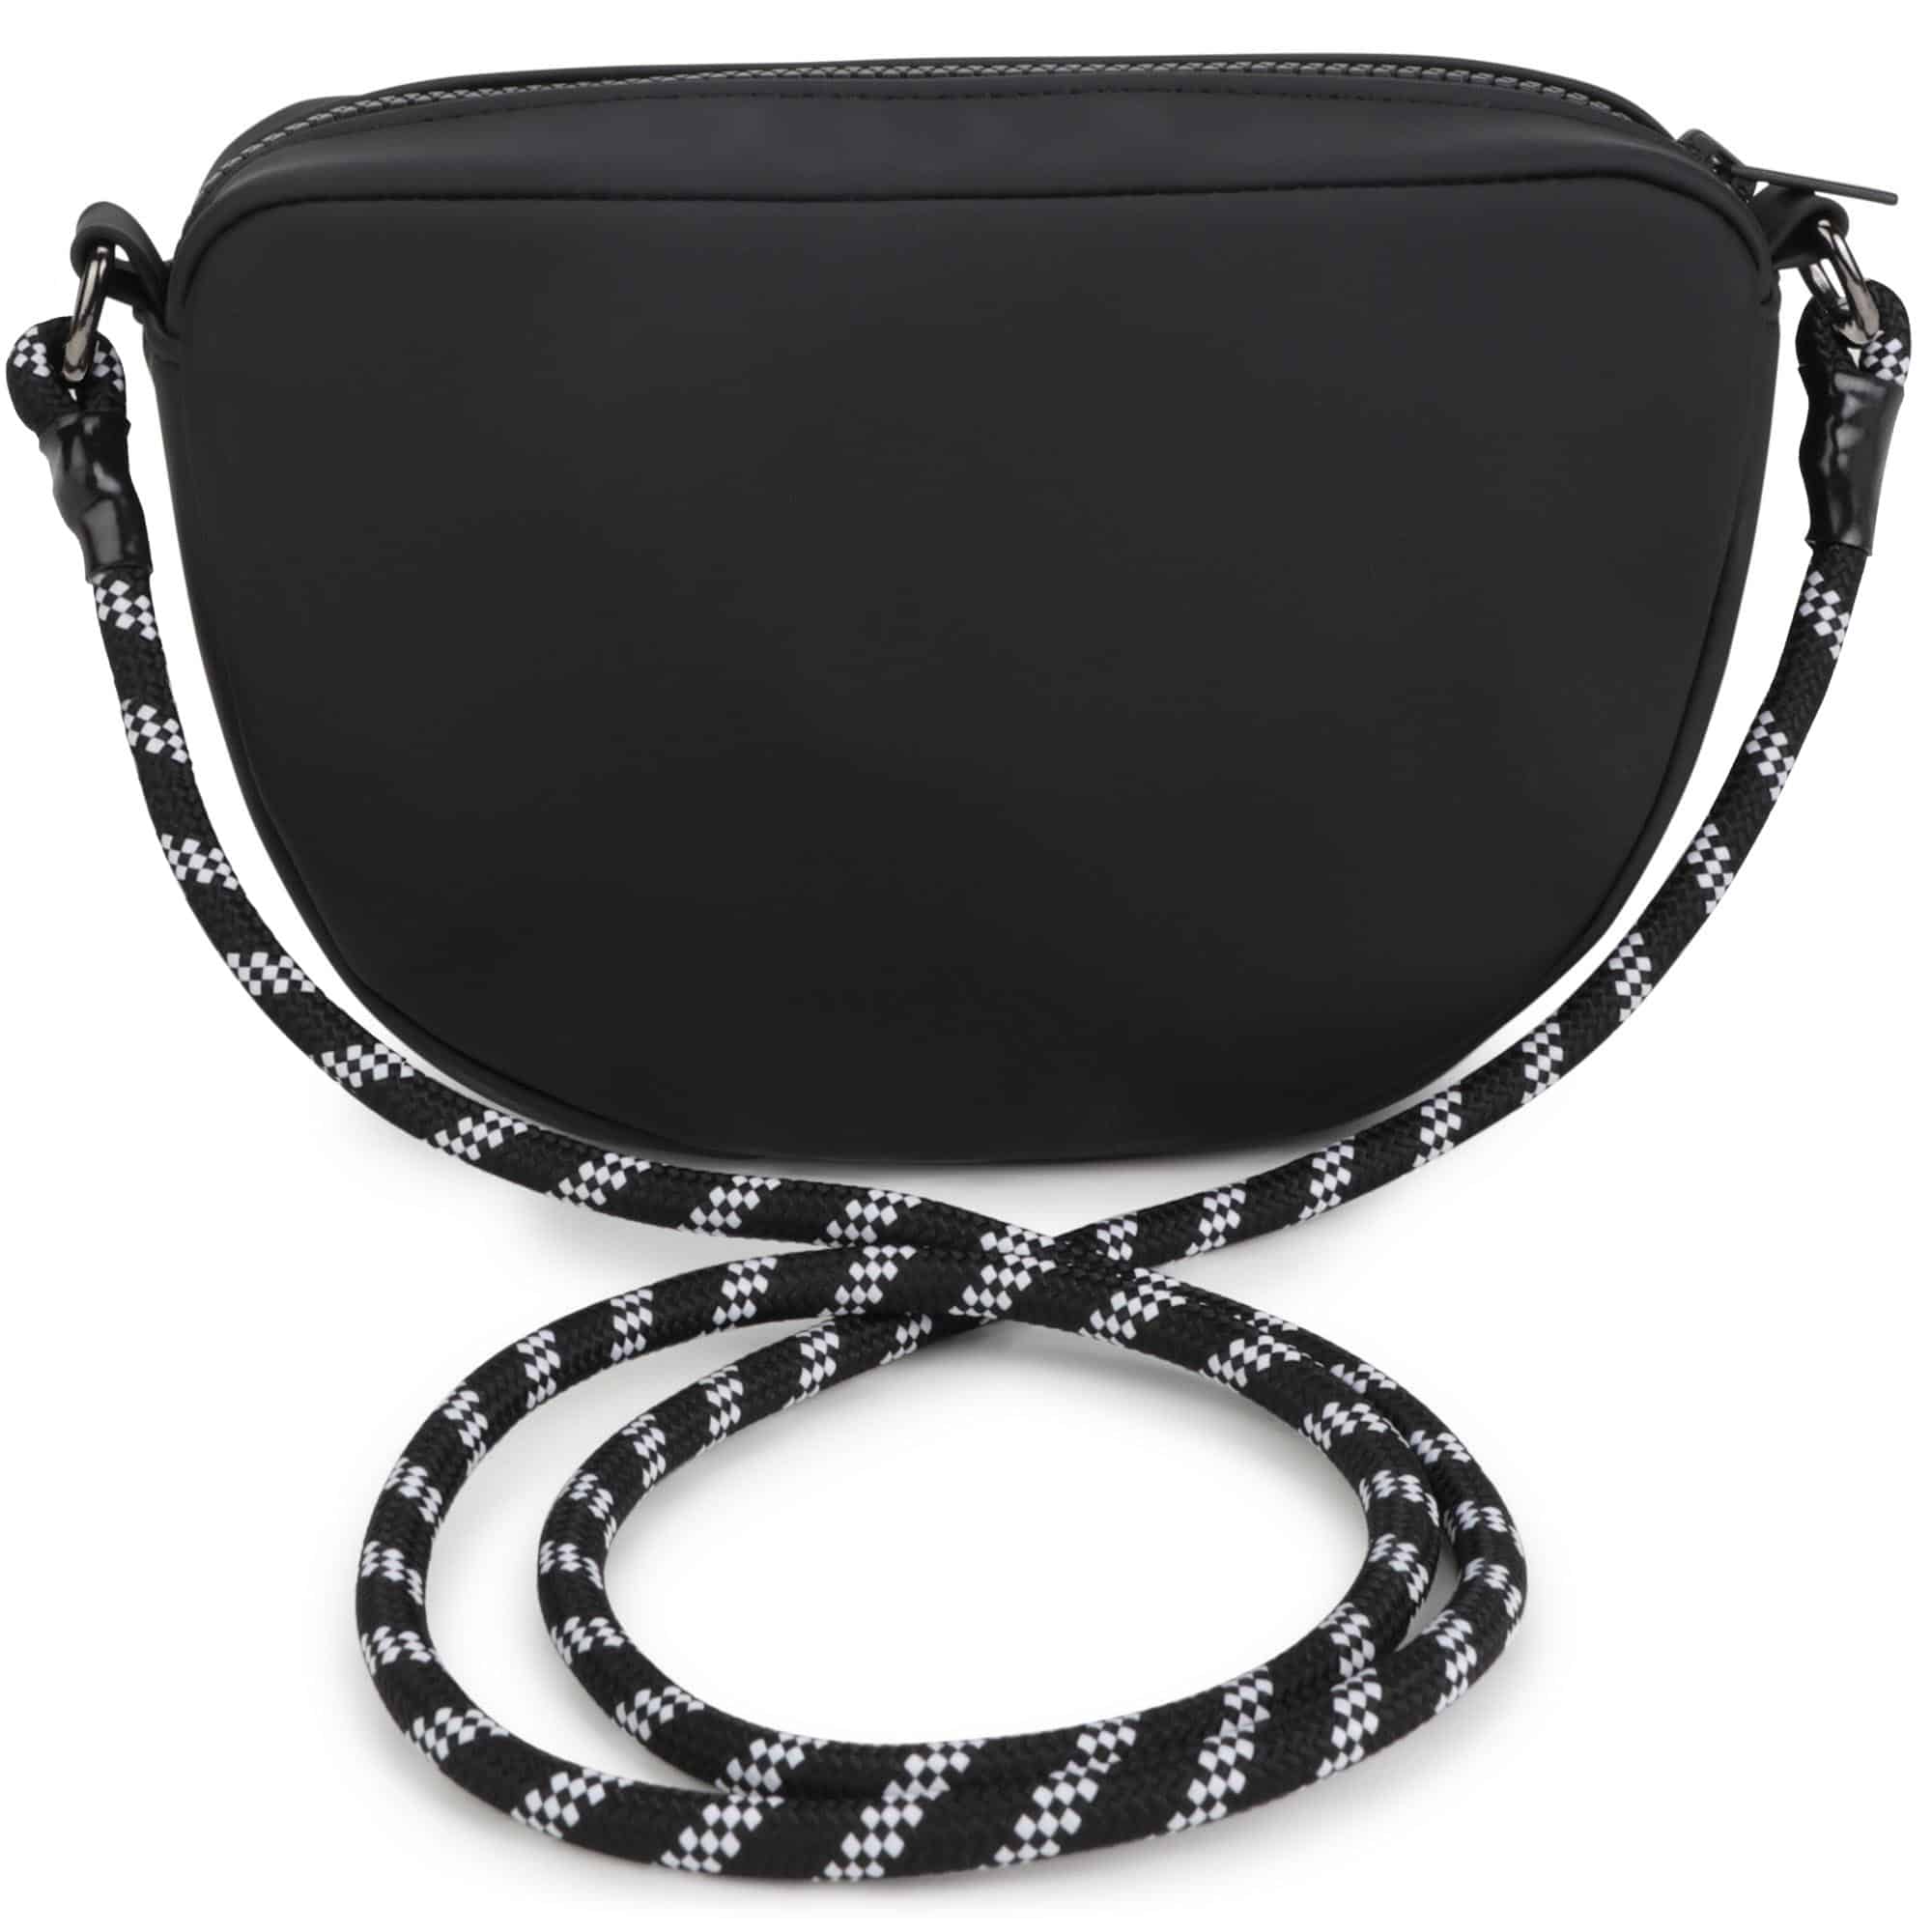 DKNY girls black crossbody bag with white logo back view